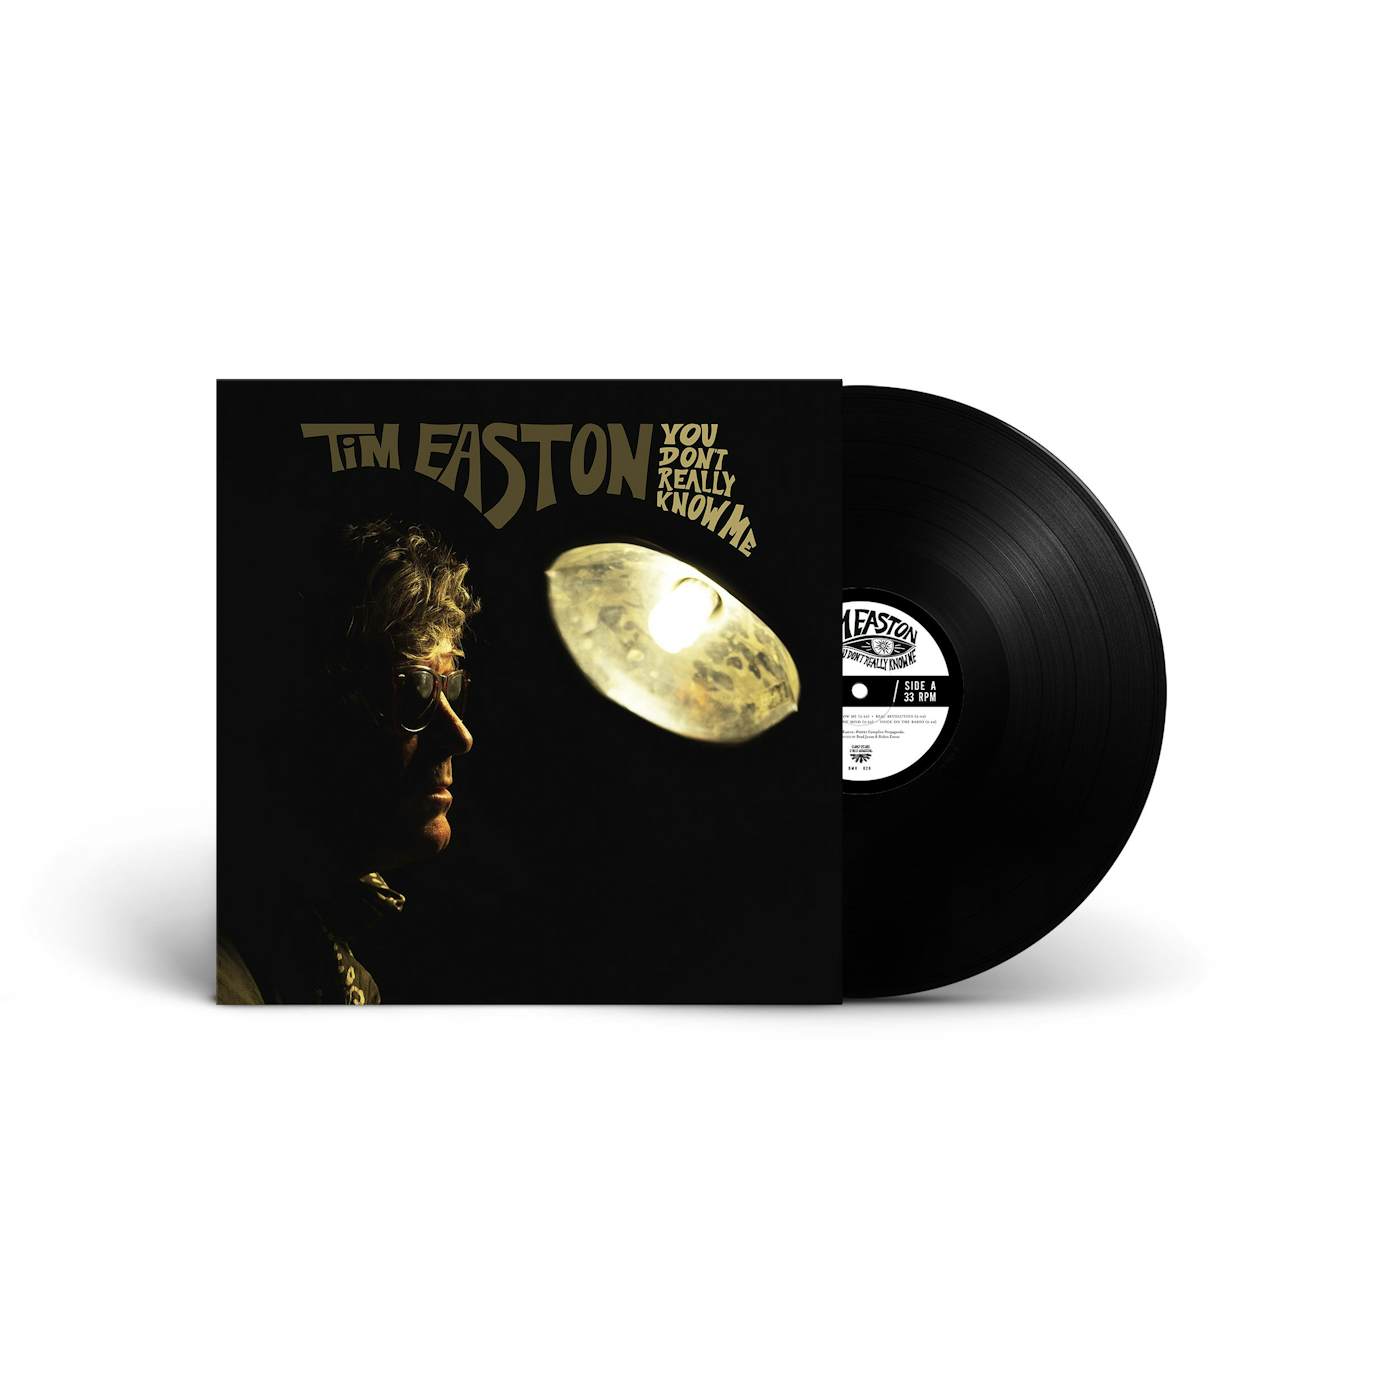 Tim Easton You Don't Really Know Me 12"LP (Black vinyl)